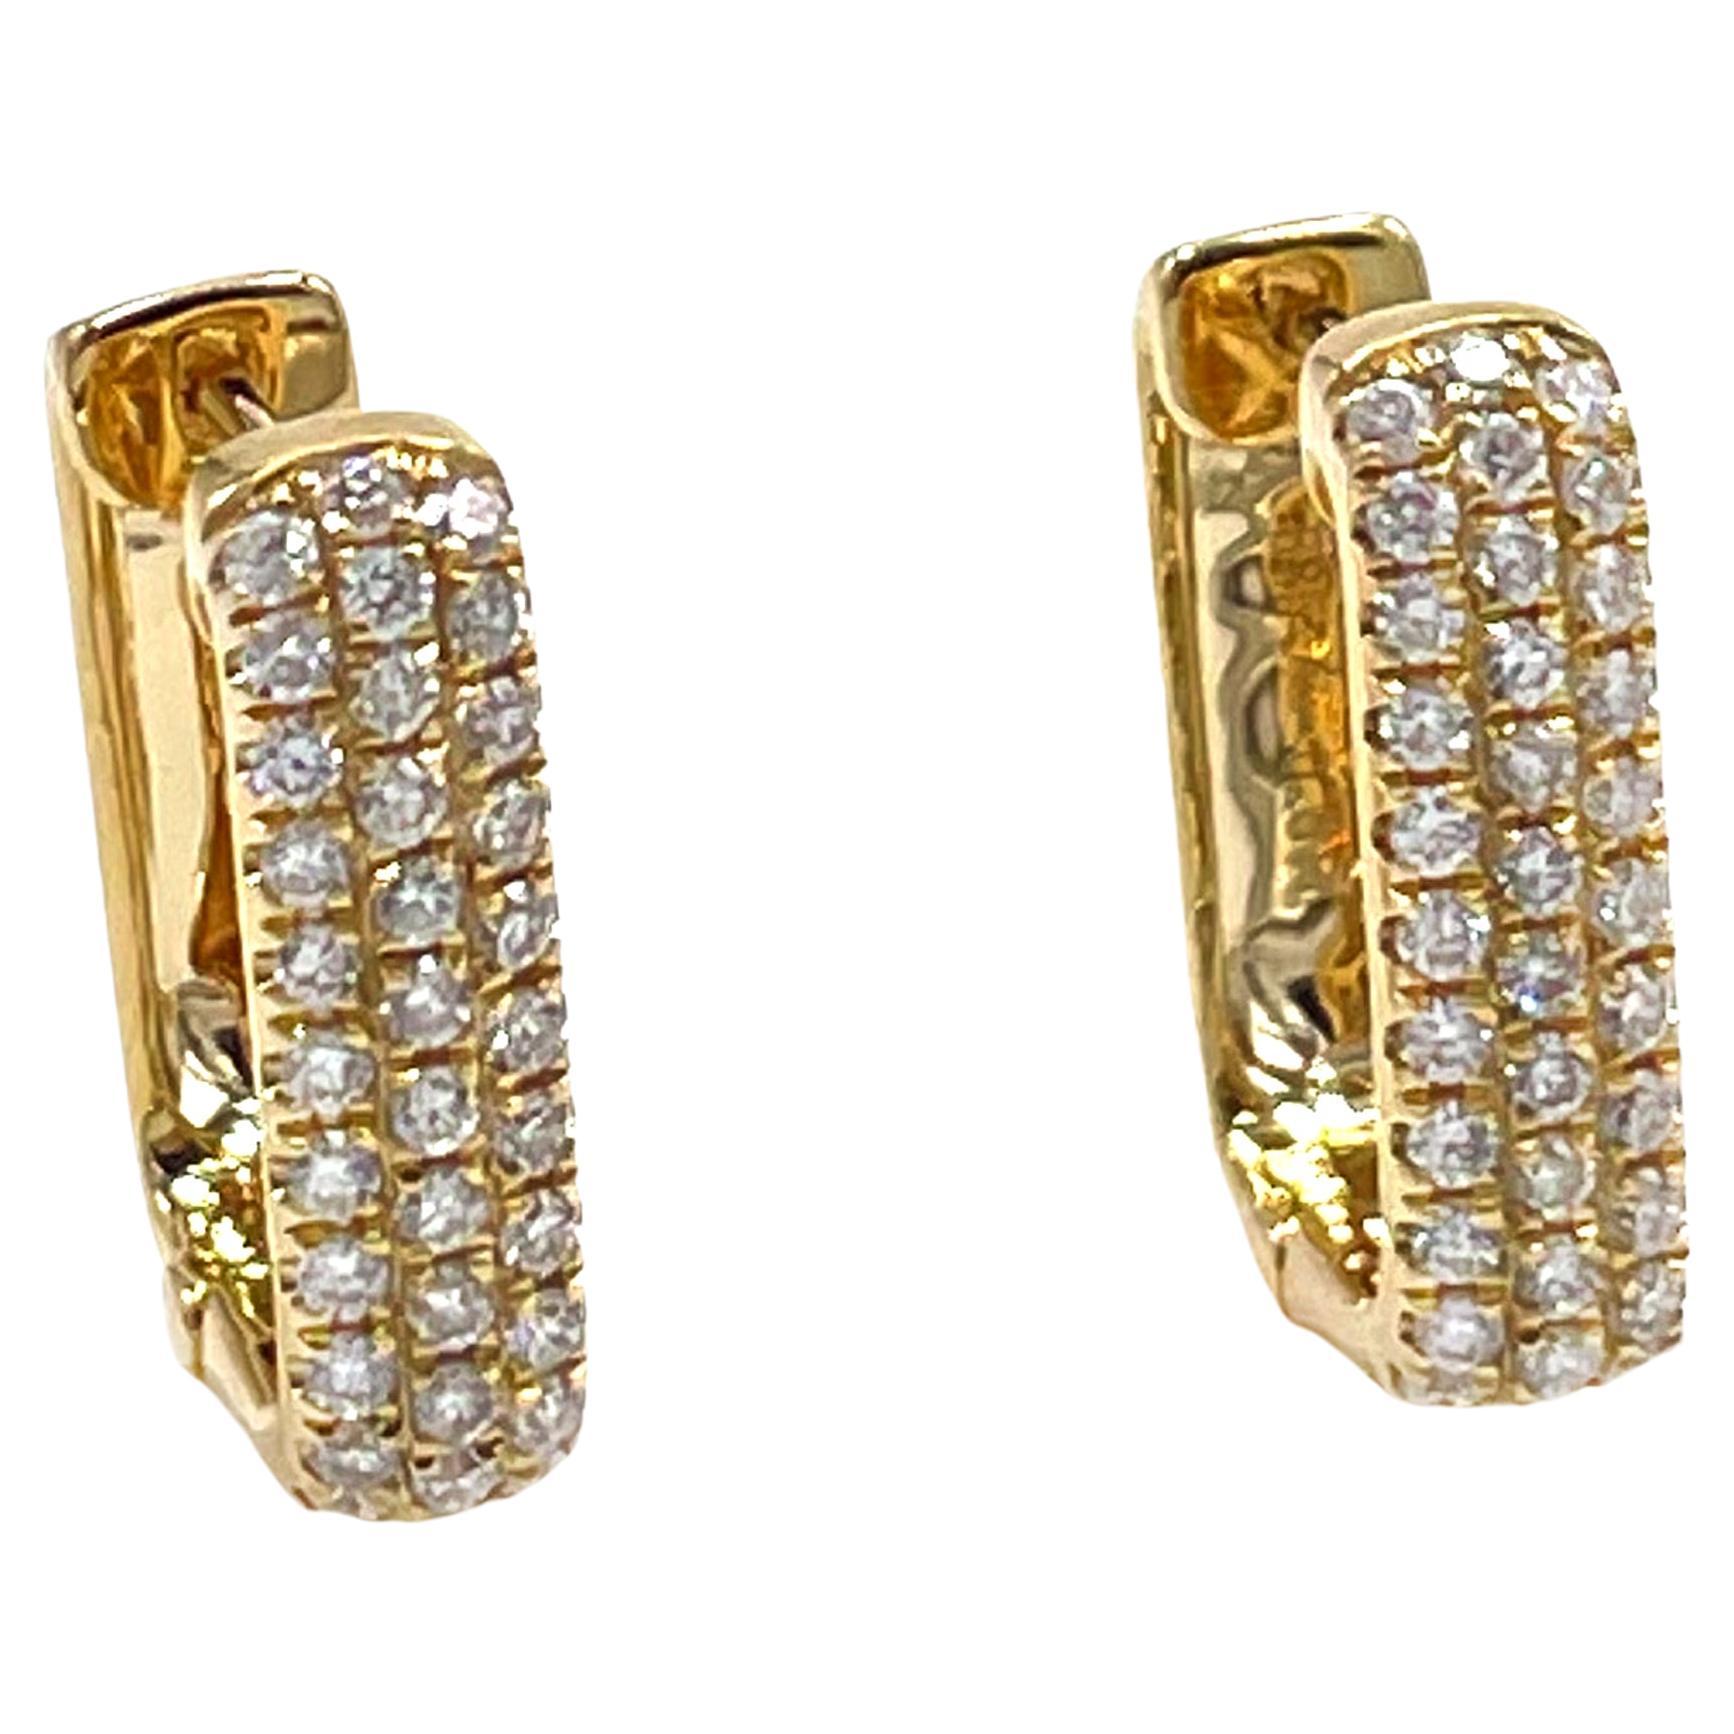 14K Yellow Gold Rectangular Pave Set Diamond Earrings